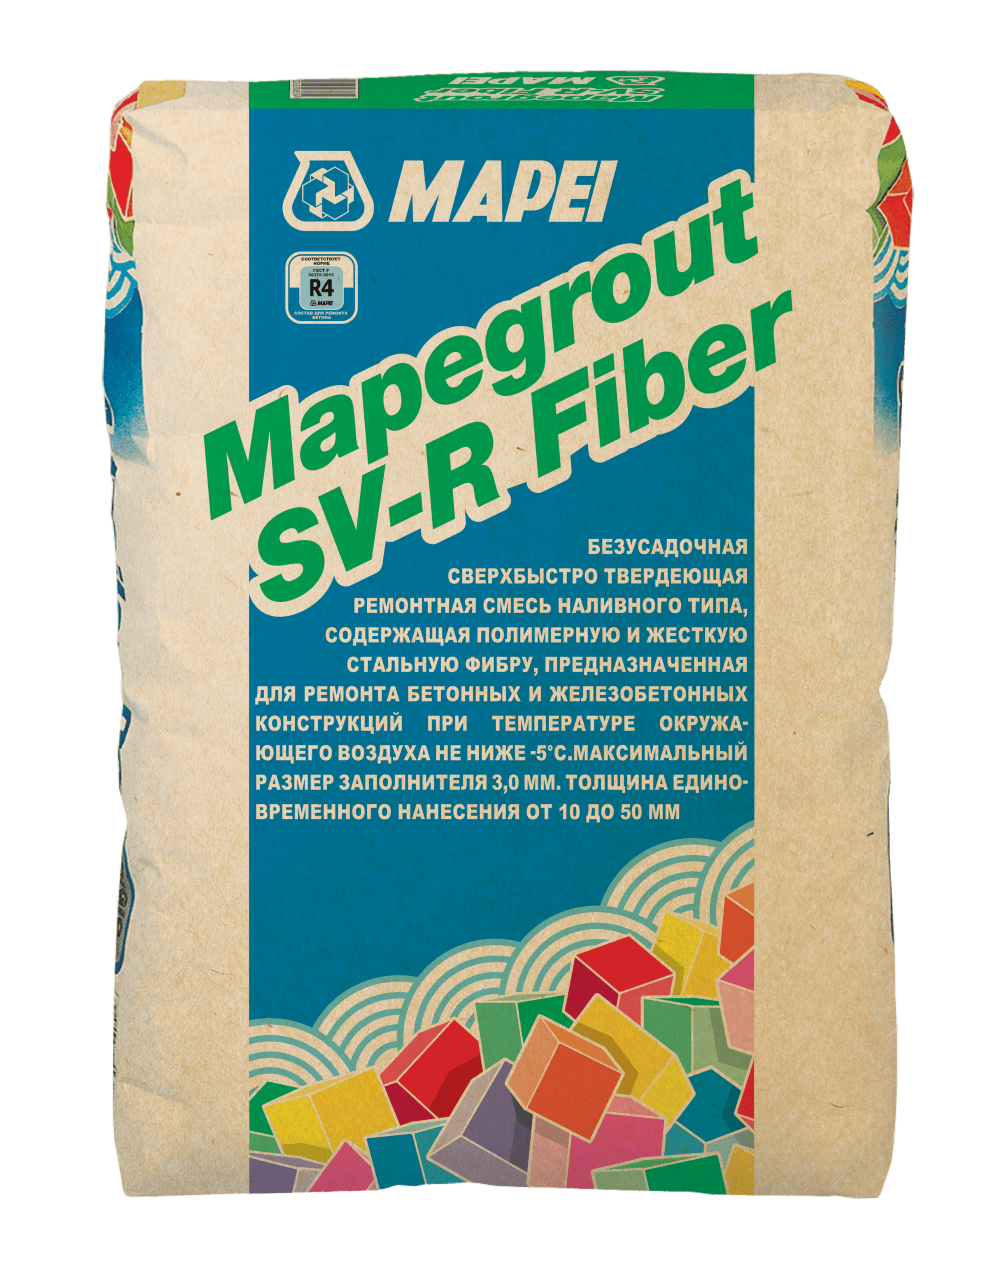 Mapegrout SV R Fiber Ремонтный состав